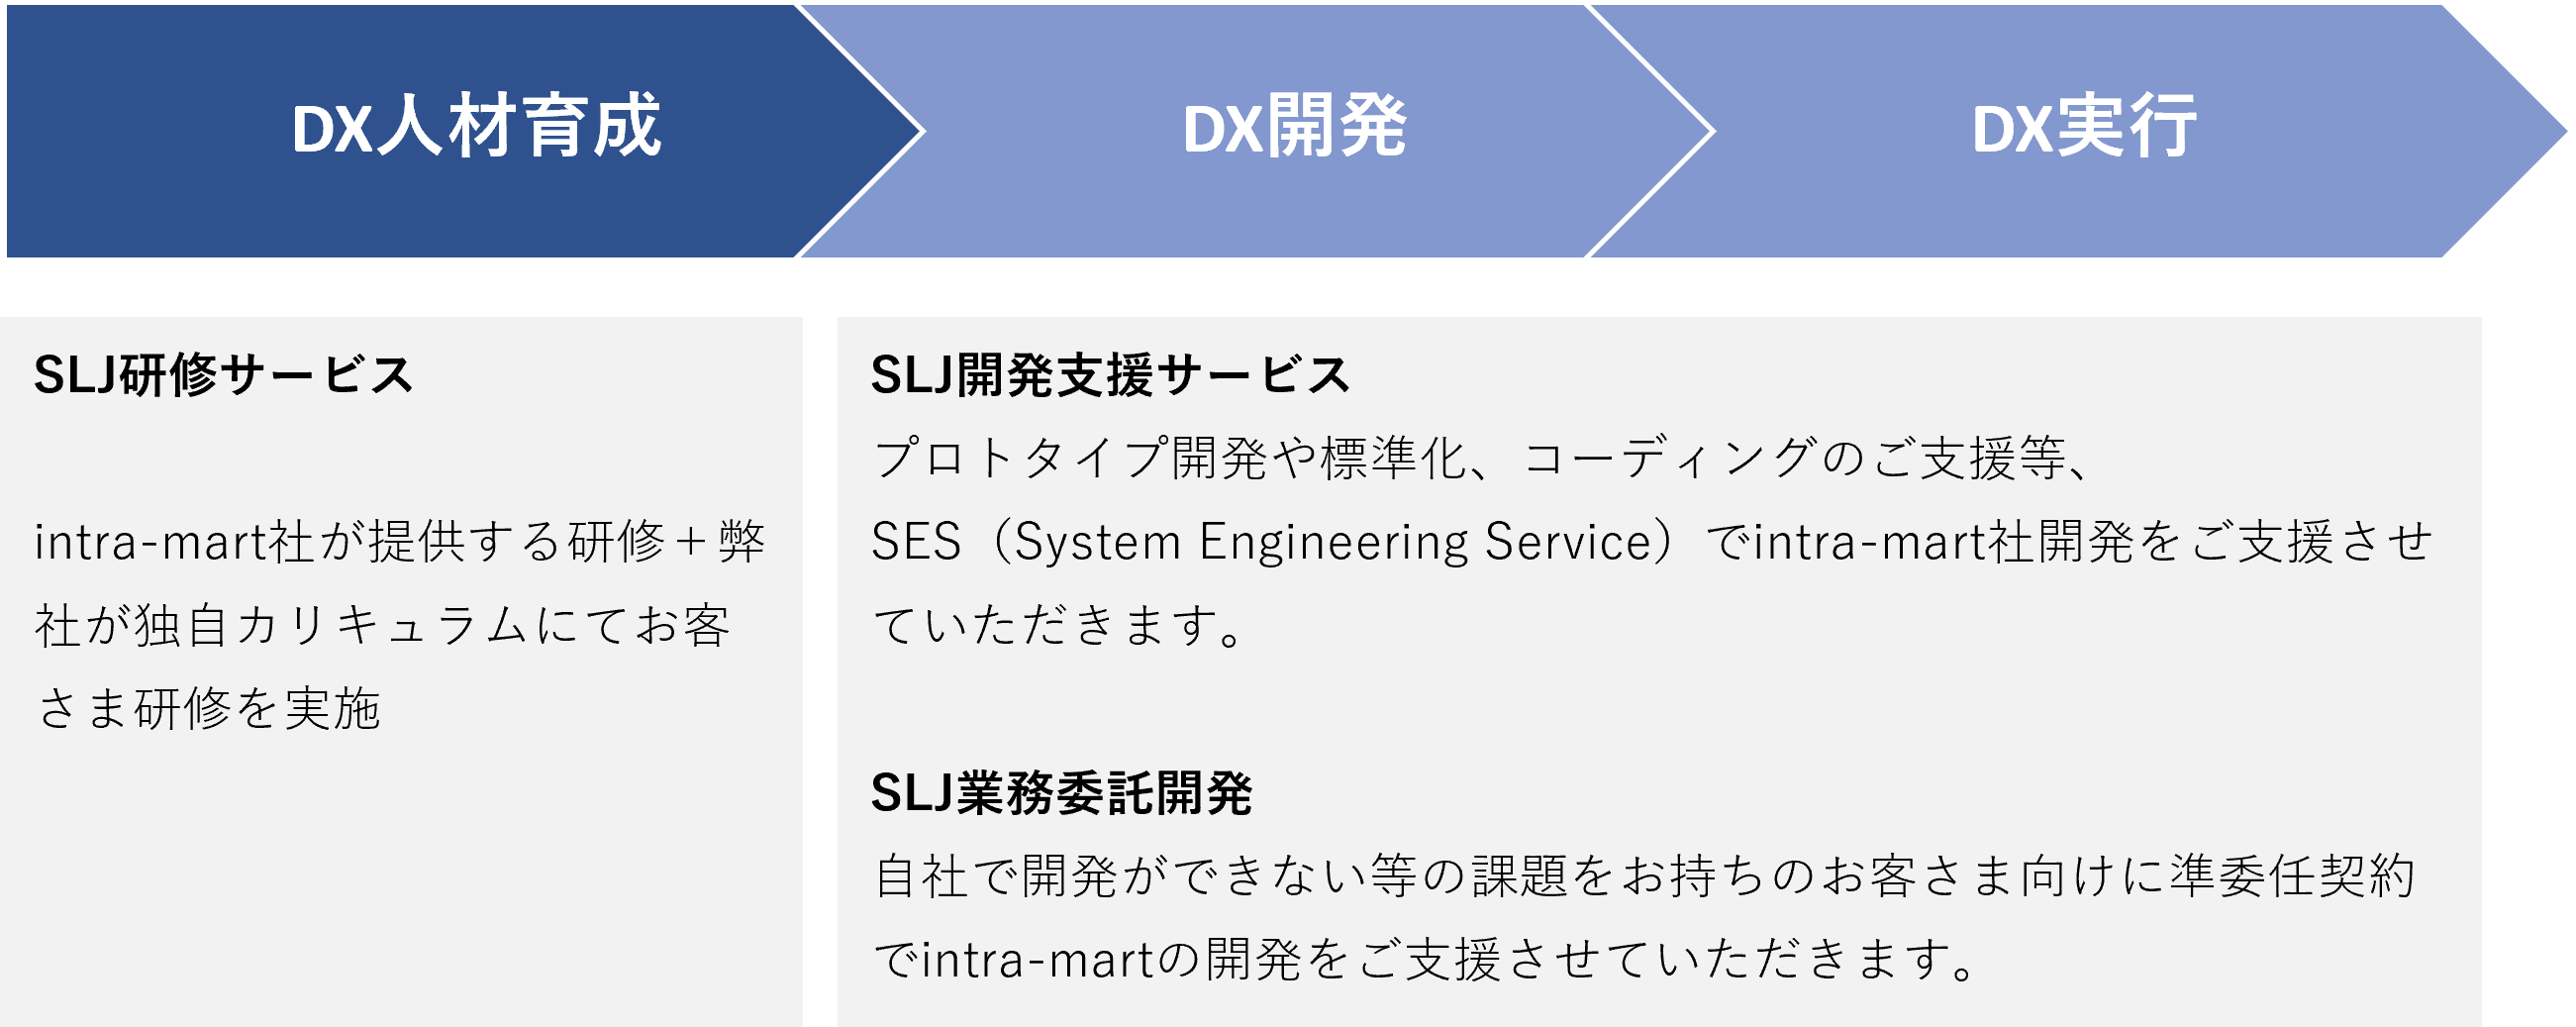 DX人材育成：SLJ研修サービス intra-mart社が提供する研修+弊社が独自カリキュラムにてお客さま研修を実施／DX開発 DX実行：SLJ開発支援サービス プロトタイプ開発や標準化、コーディングのご支援等、SES（System Engineering Service）でintra-mart社開発をご支援させていただきます。 SLJ業務委託開発 自社で開発ができない等の課題をお持ちのお客さま向けに準委任契約でintra-martの開発をご支援させていただきます。